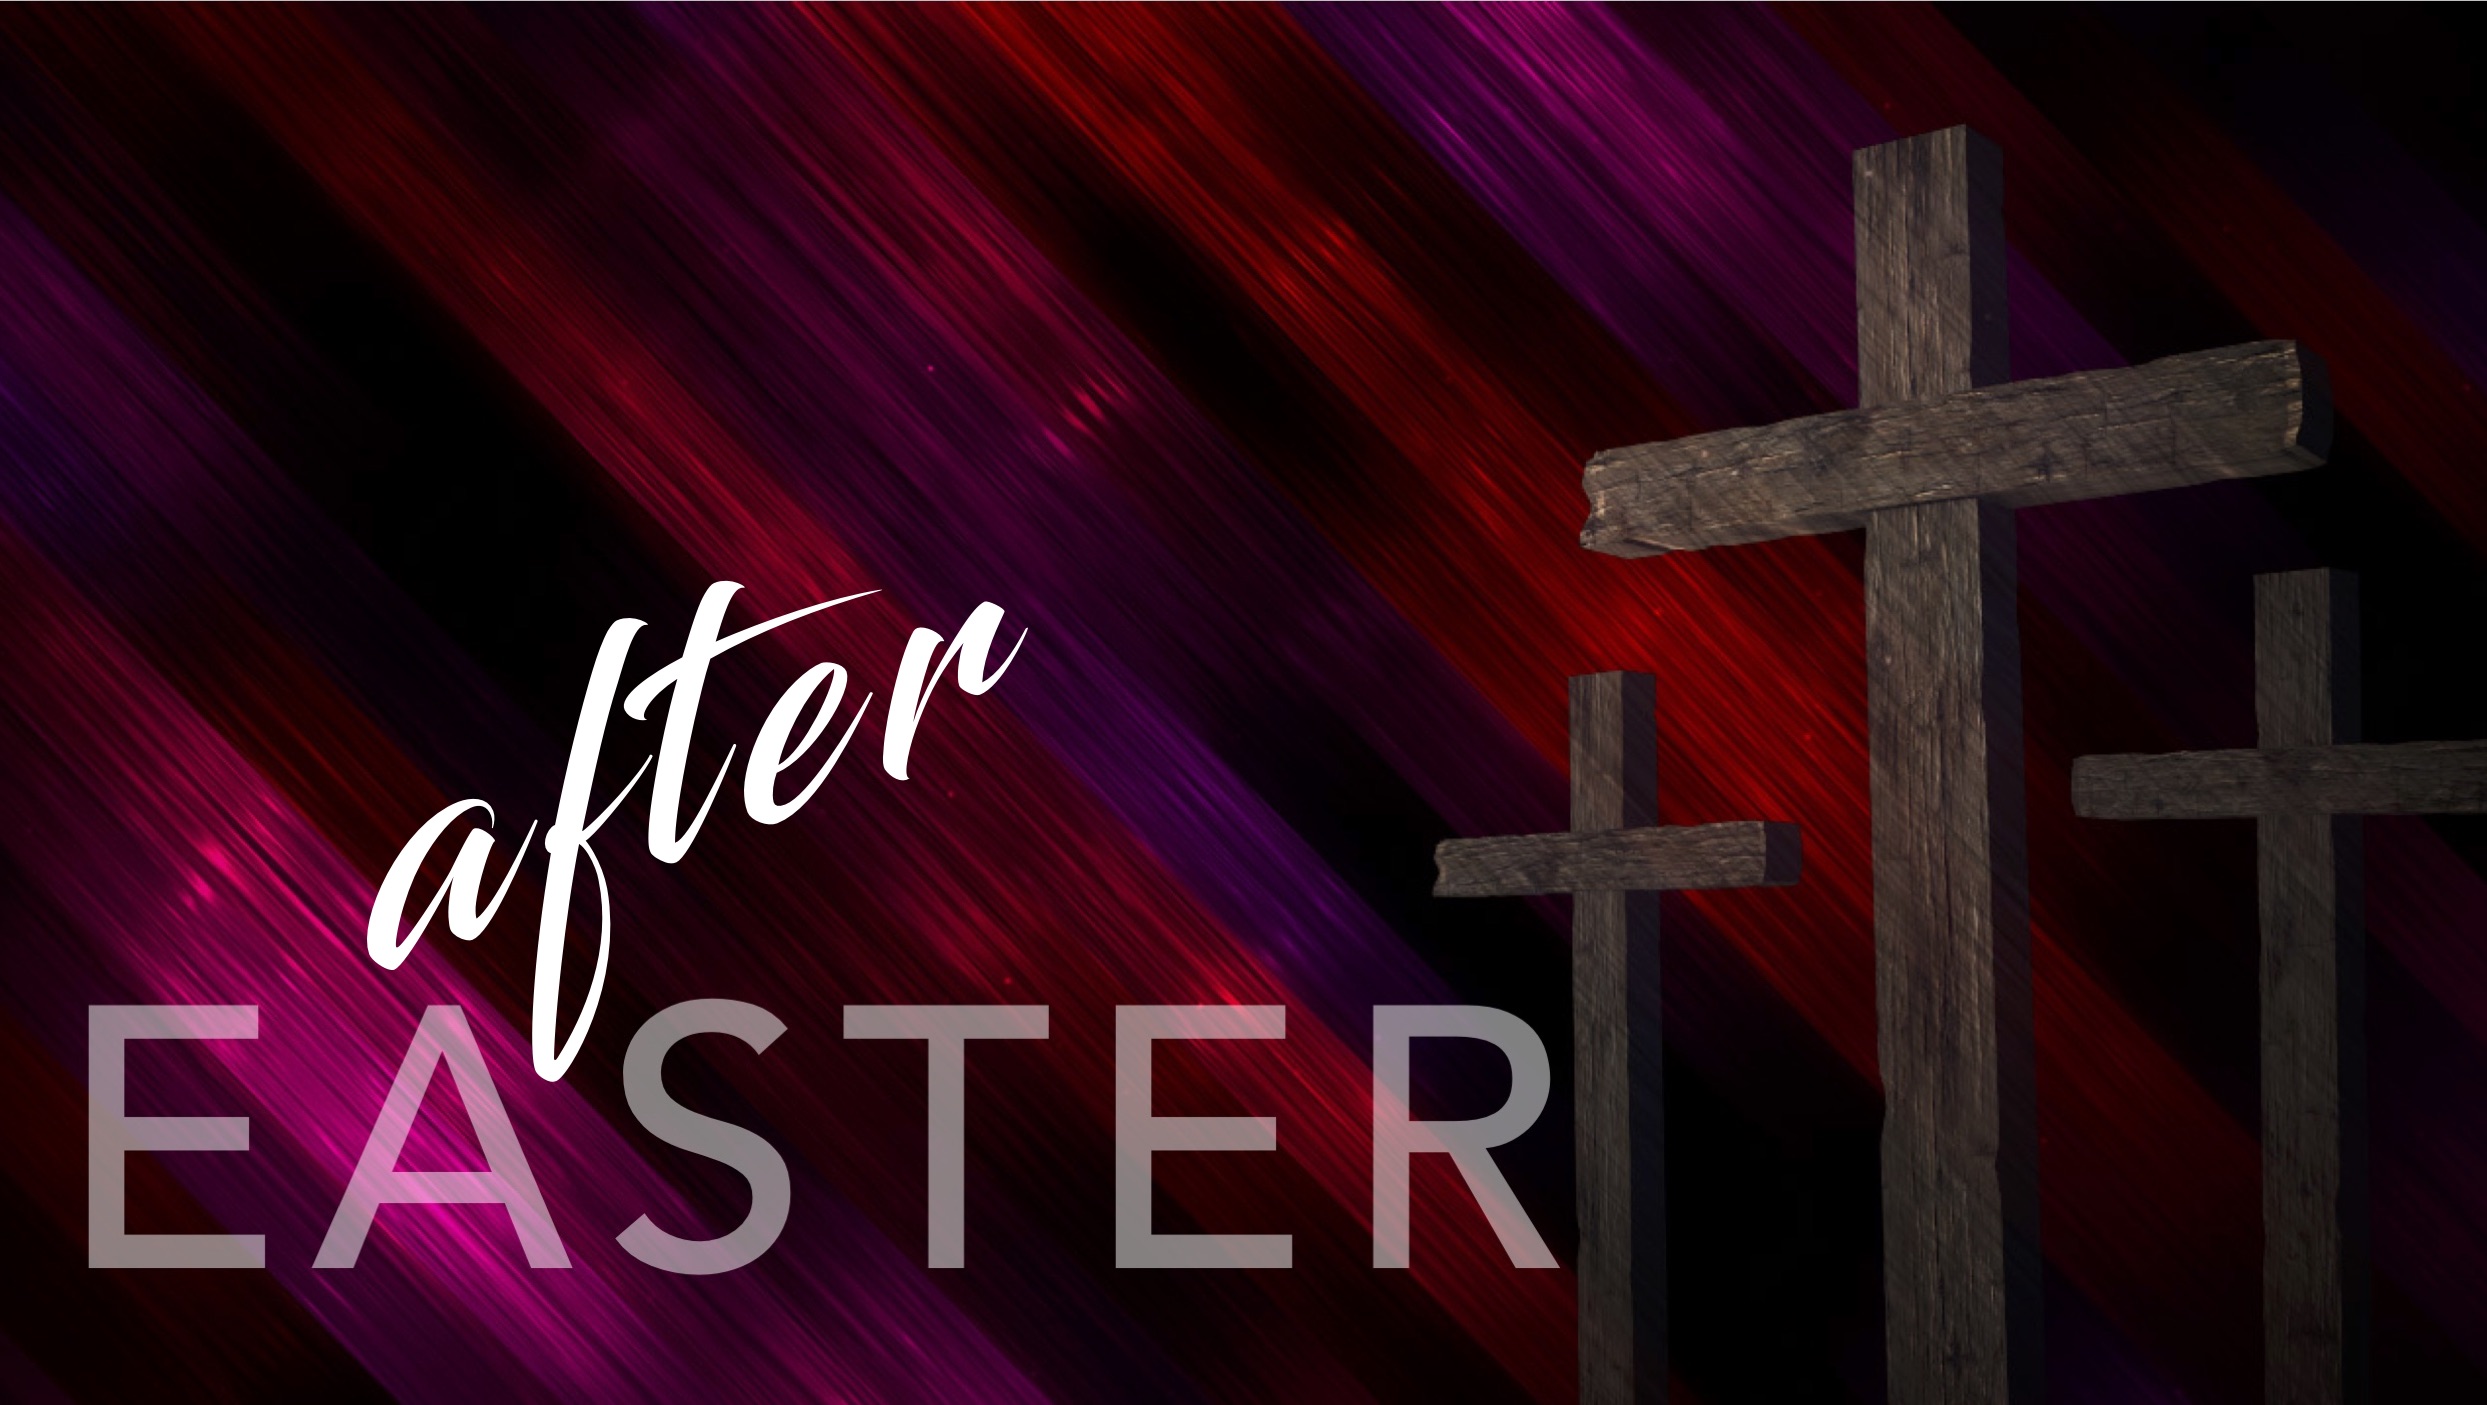 Sunday April 26, 2020 After Easter Week 2 Solitude Baptist Church